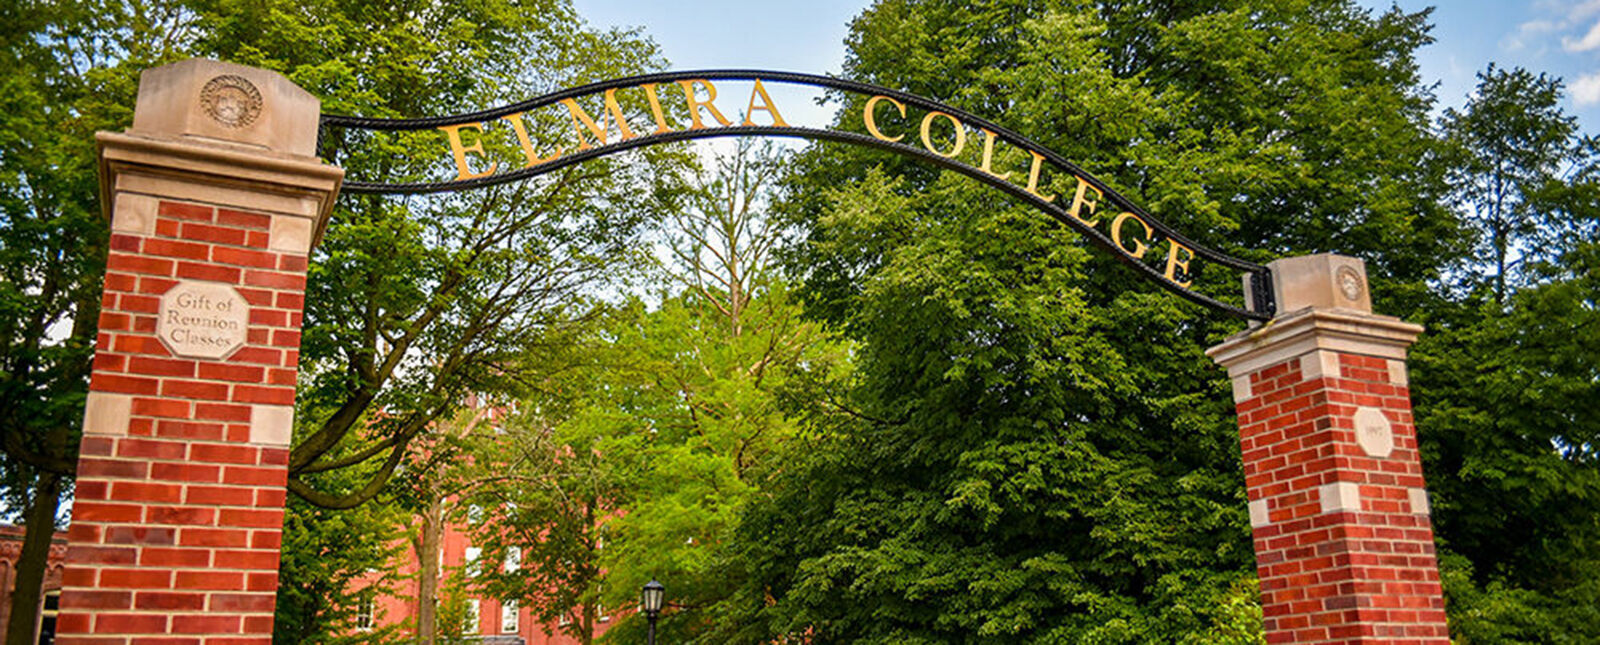 The Elmira College campus archway